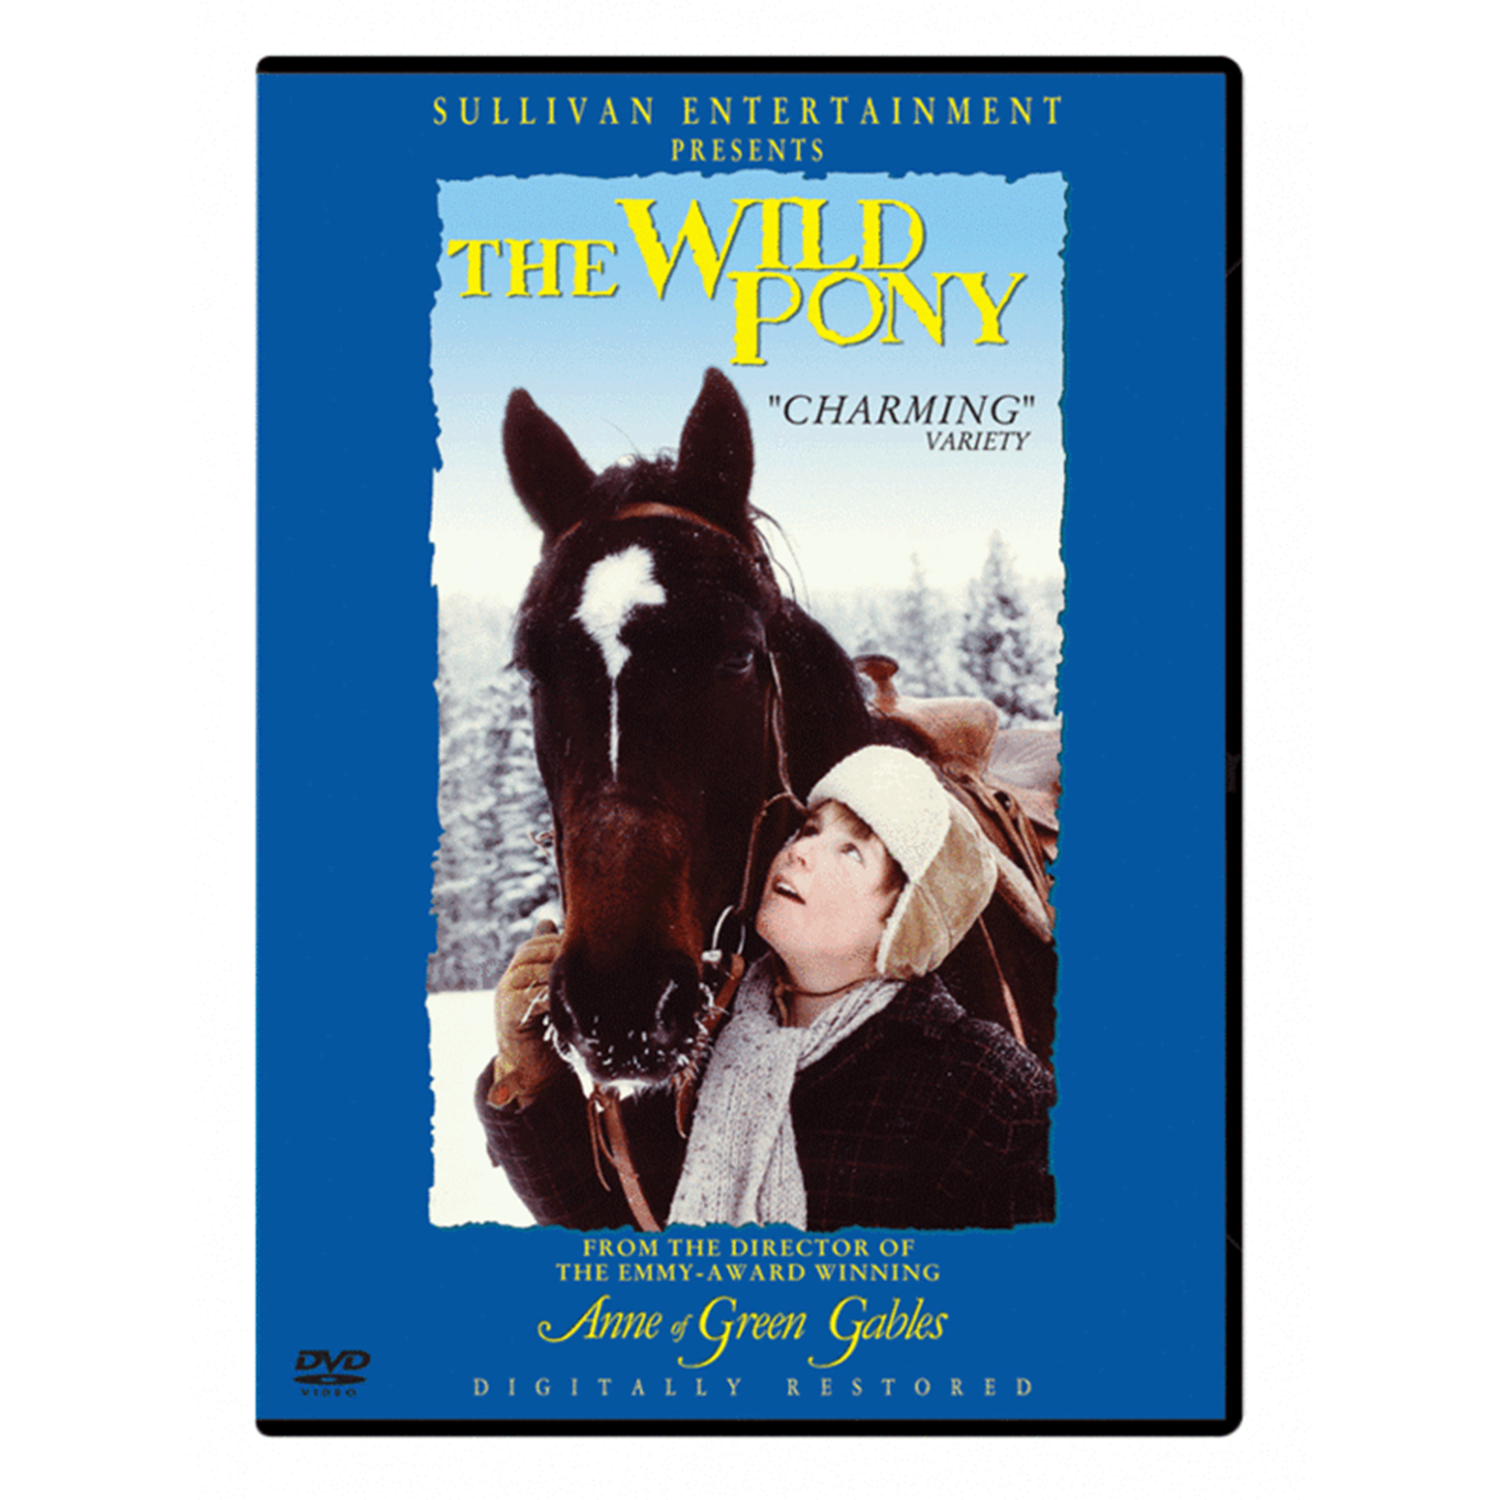 The Wild Pony DVD -Standard Fullscreen